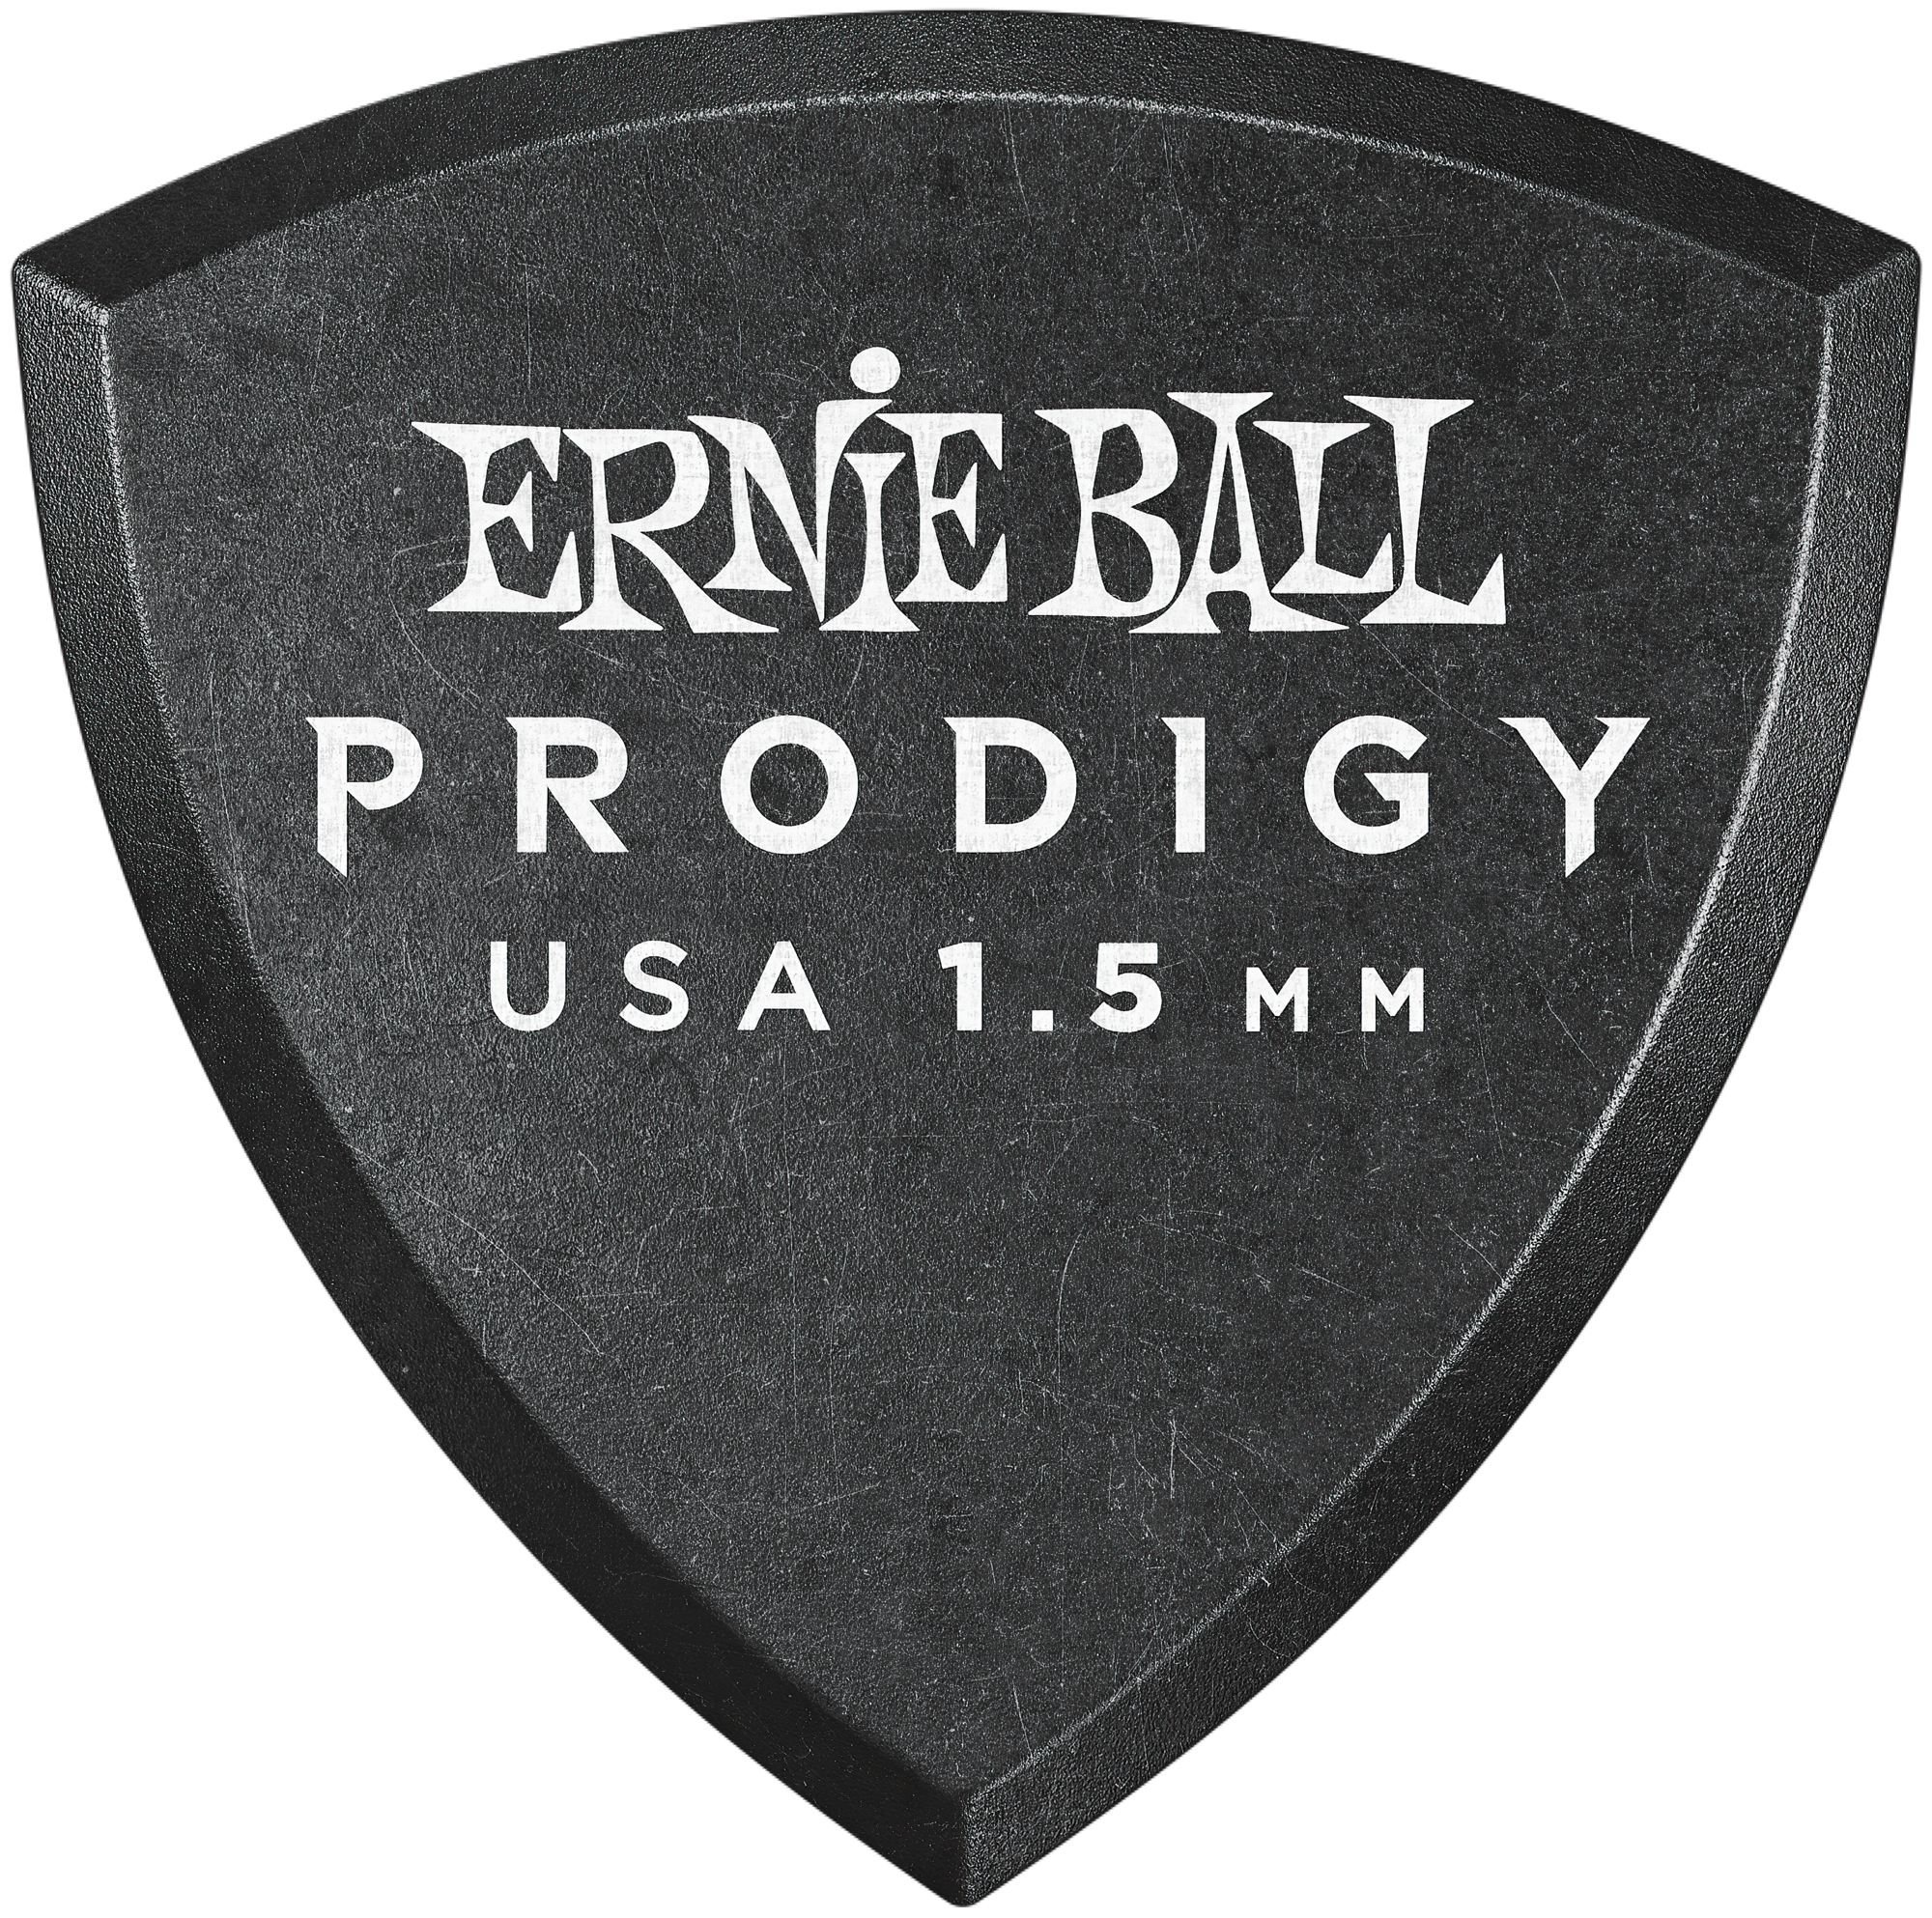 ERNIE BALL 9331 Plektren, Prodigy, Shield, 1,50mm, schwarz, 6 St